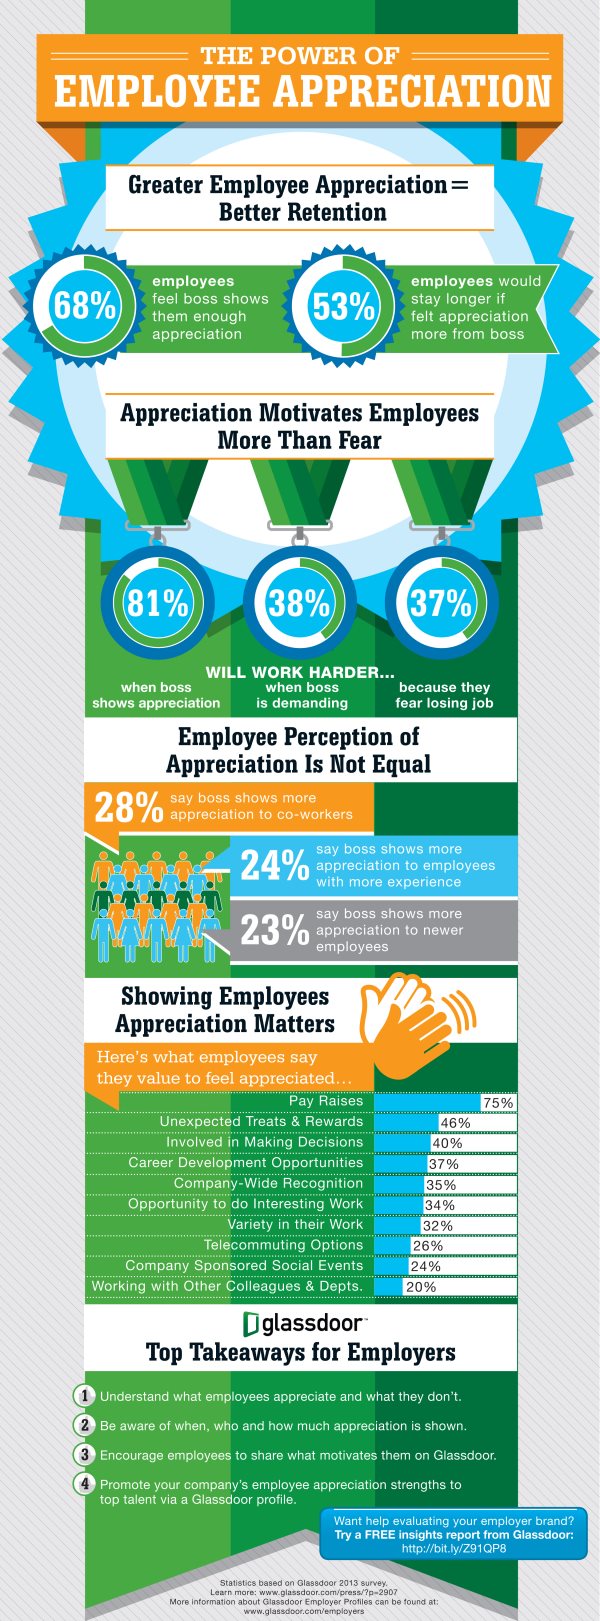 Employee-Appreciation-Infographic